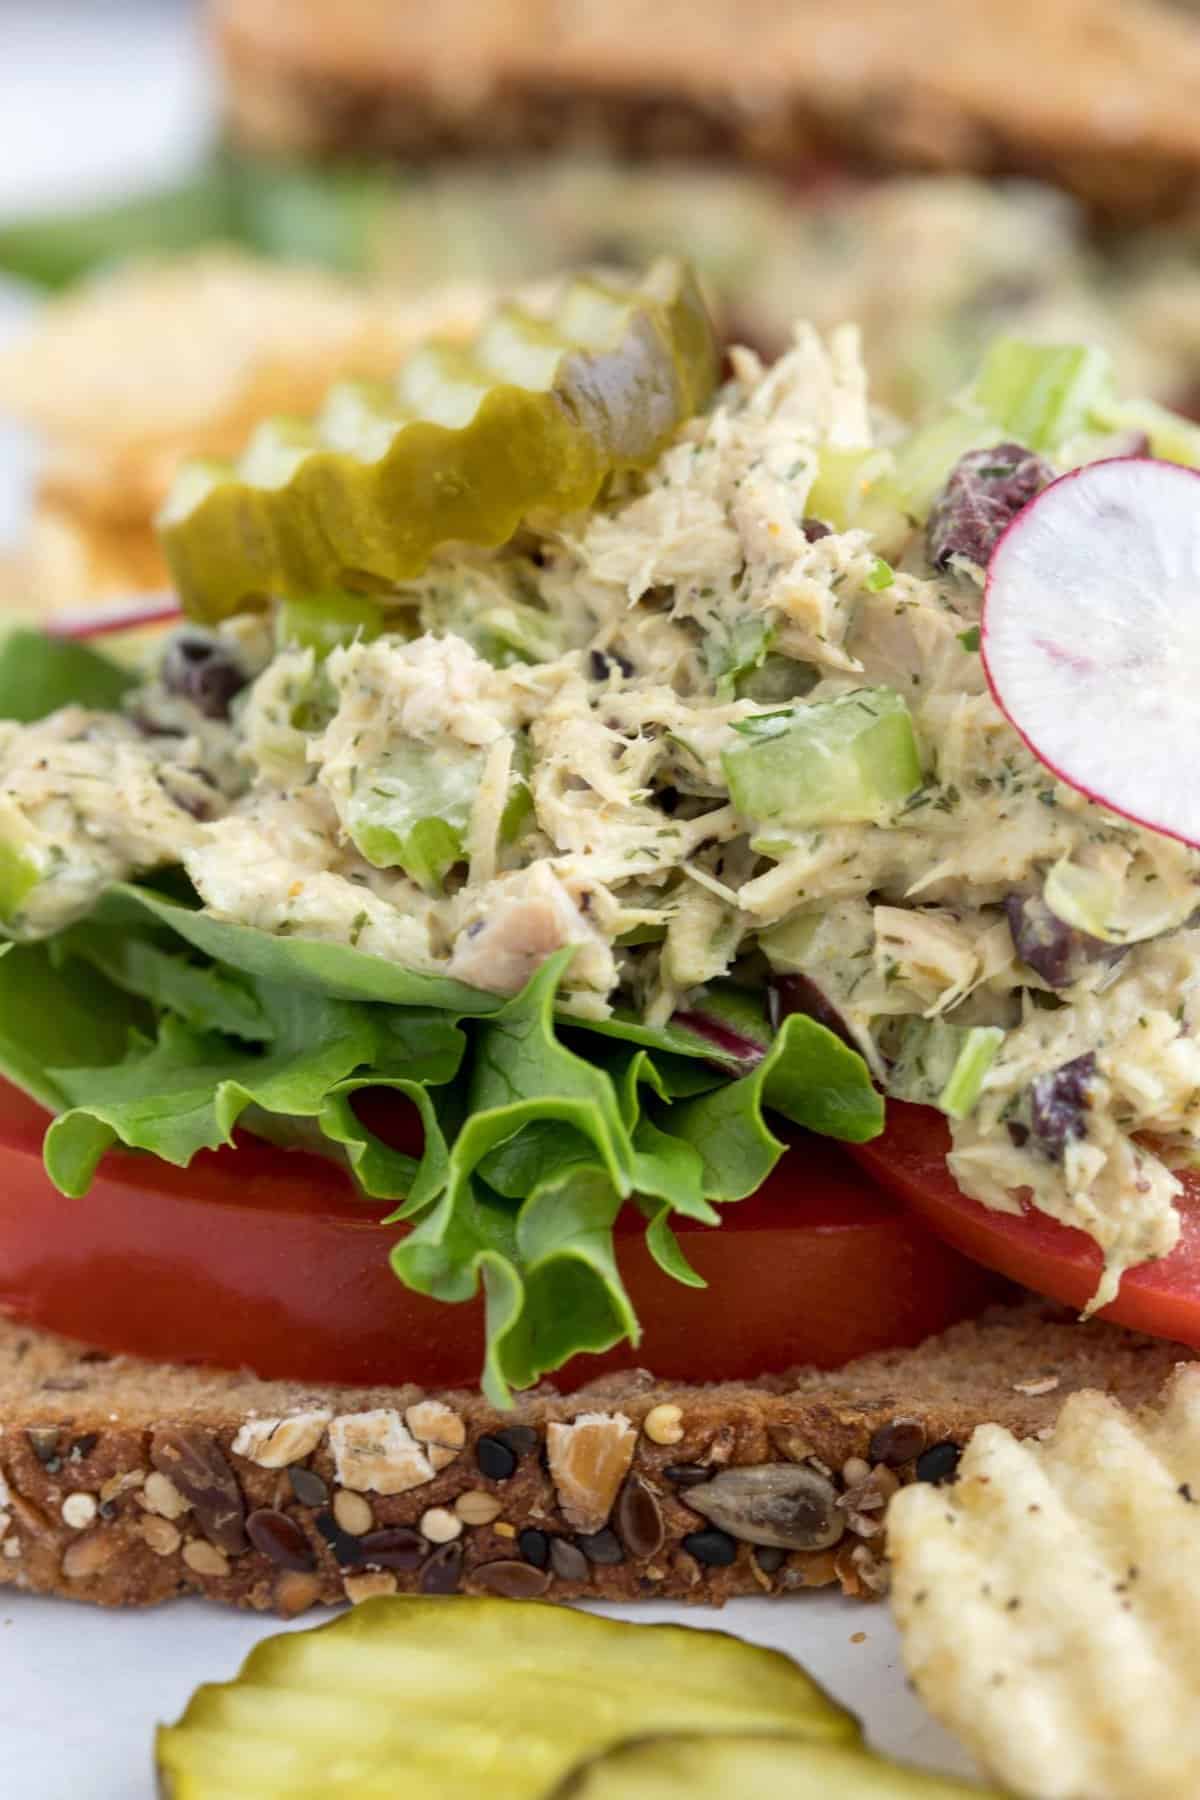 Tuna Salad Sandwich - The Harvest Kitchen